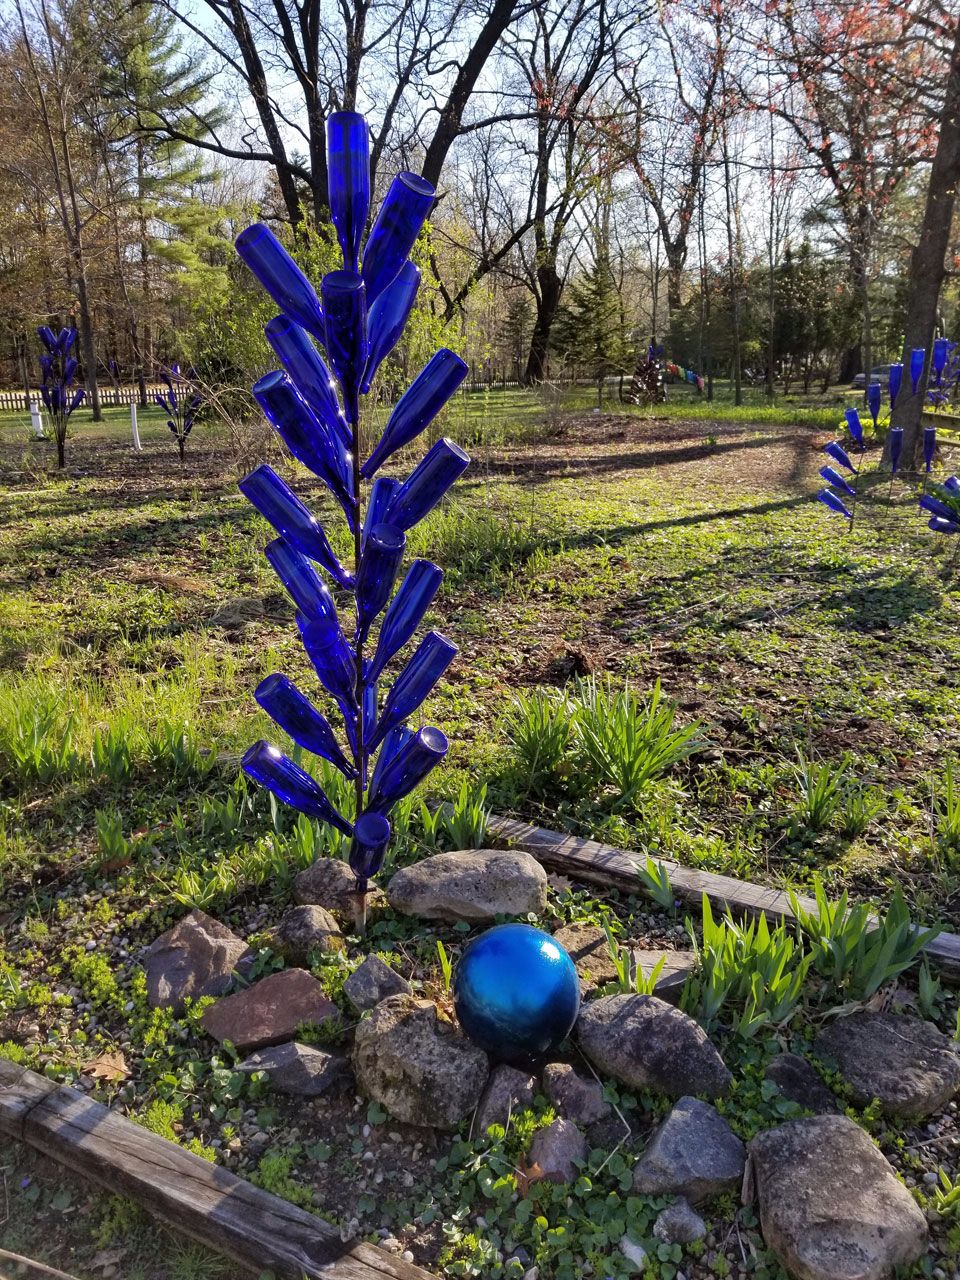 Better bottle tree: Now I've really got the blues - Digging